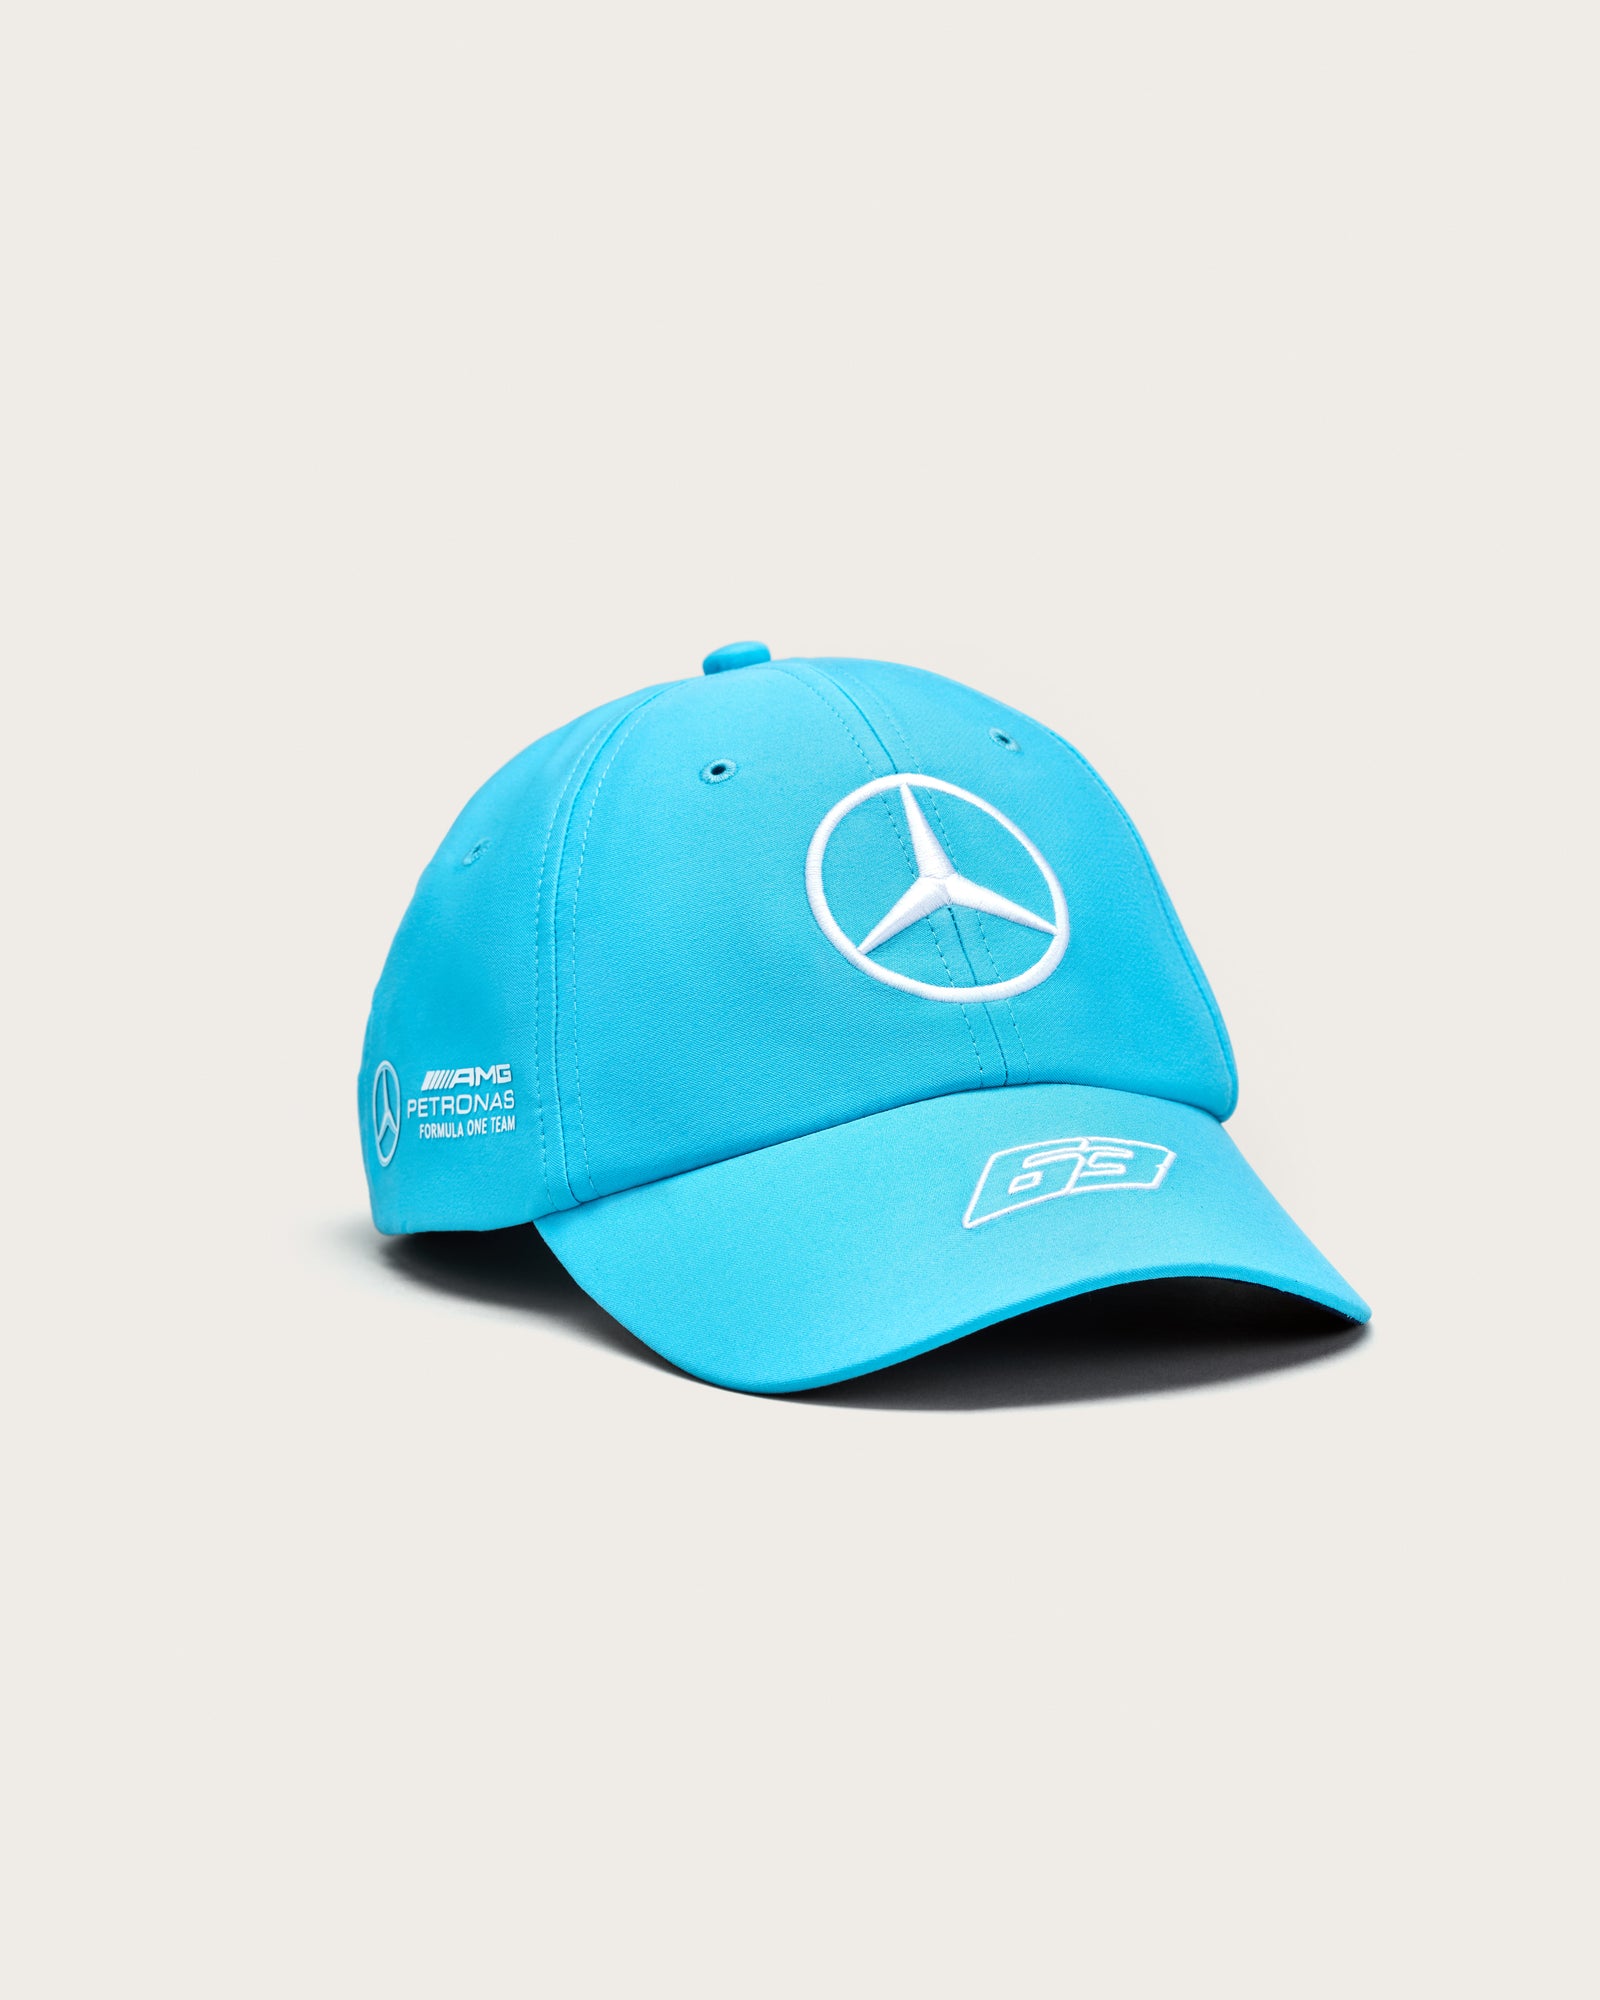 F1 Mercedes-AMG | Store Mercedes F1 Team Official Merchandise